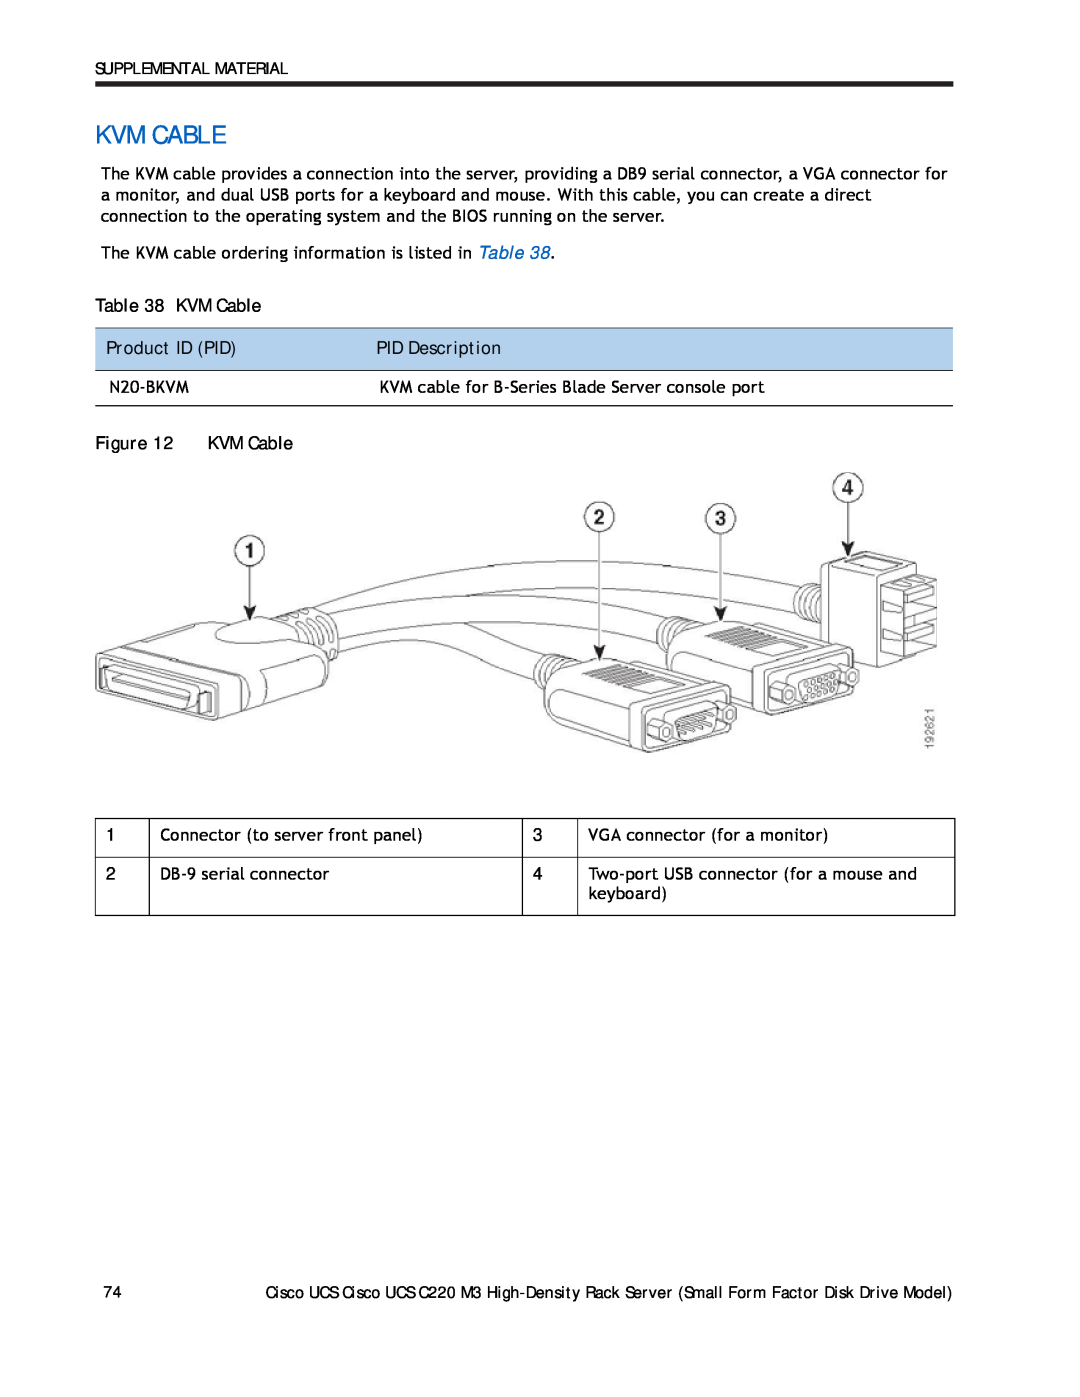 Cisco Systems A03D600GA2 manual Kvm Cable, KVM Cable, Product ID PID, PID Description, N20-BKVM 